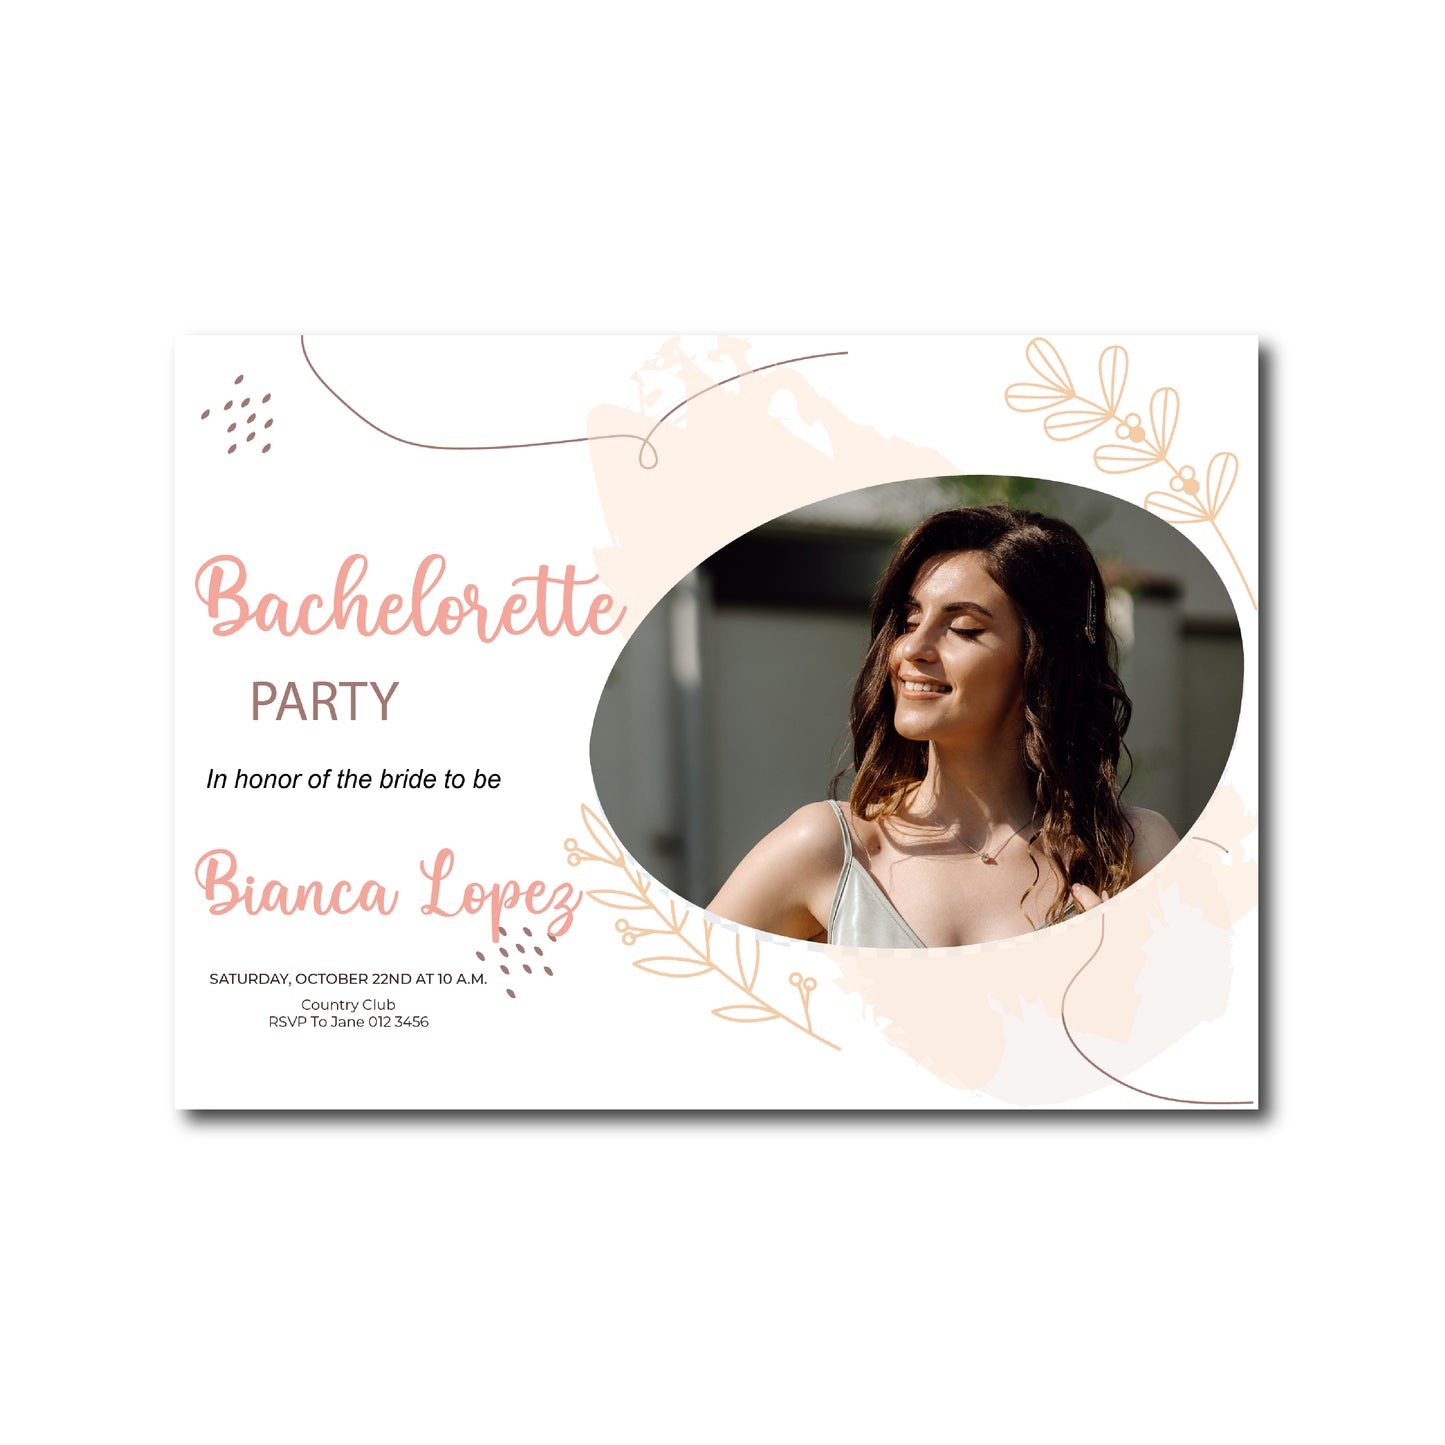 Bachelorette Party invitation, Bridal shower, bridal shower invitation, bridal shower invitation printed, bridal shower invitation floral